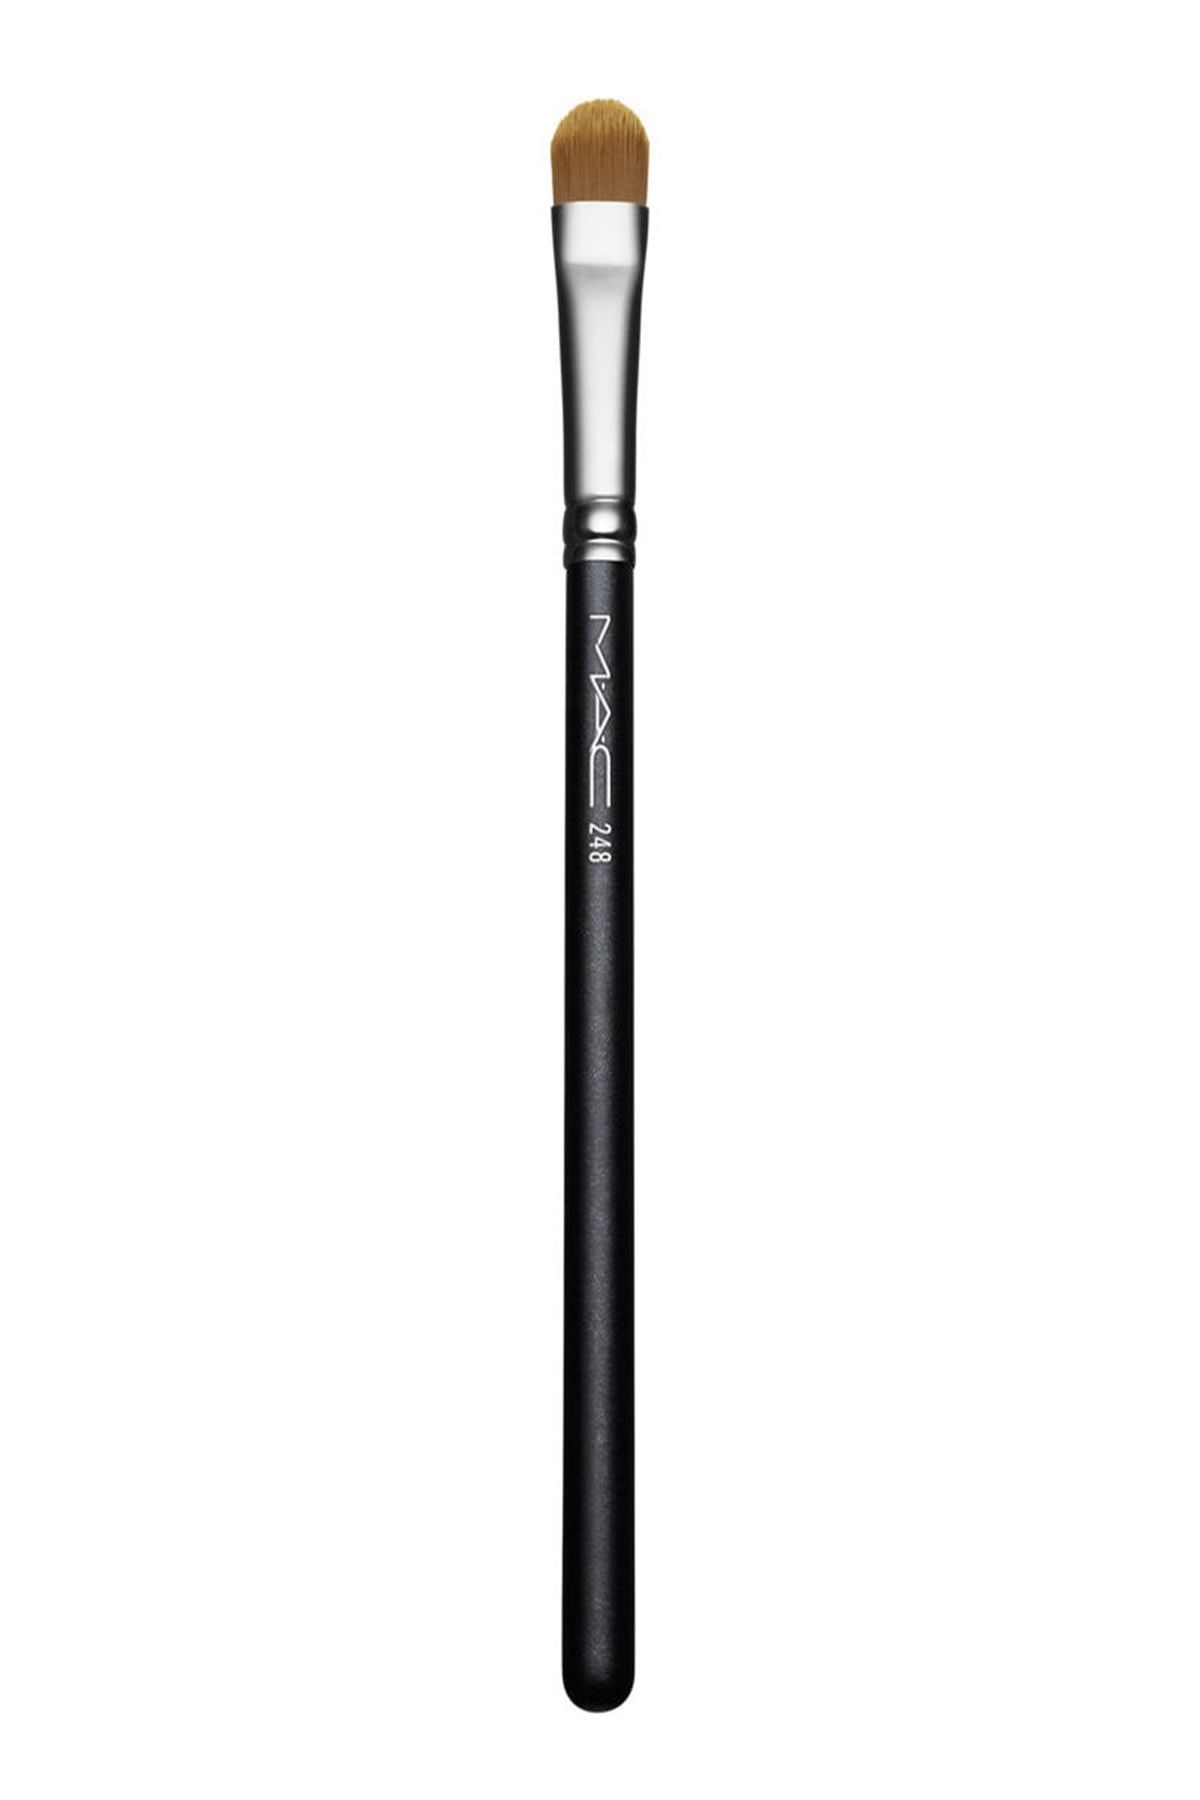 Mac Far Fırçası - 248 Synthetic Small Eye Shader Brush 773602377428